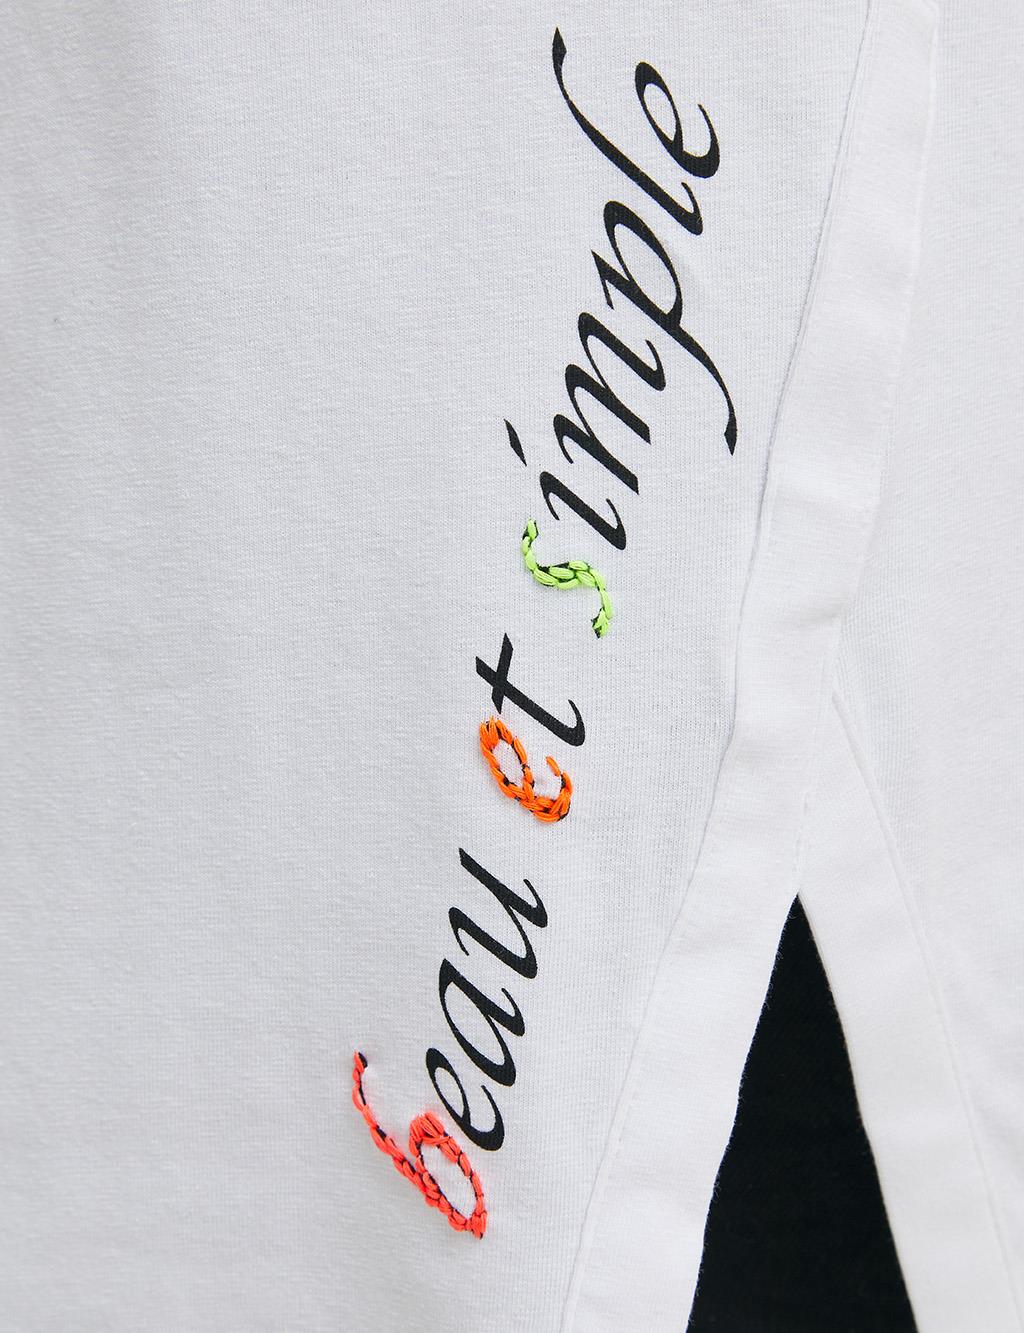 Round Neck Collar Printed T-Shirt White